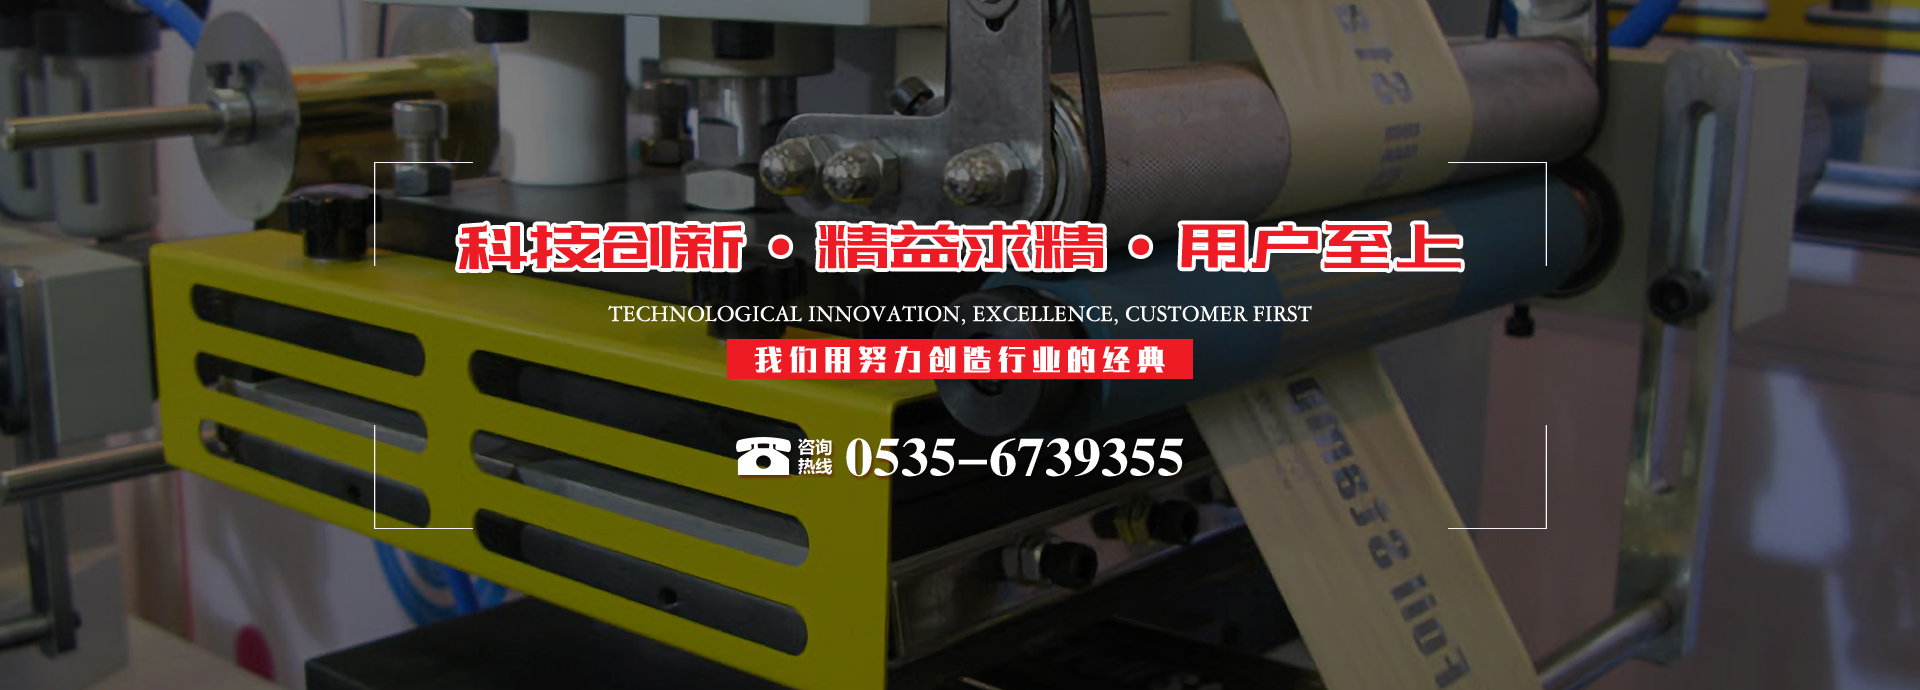 bob官方网站印刷機械